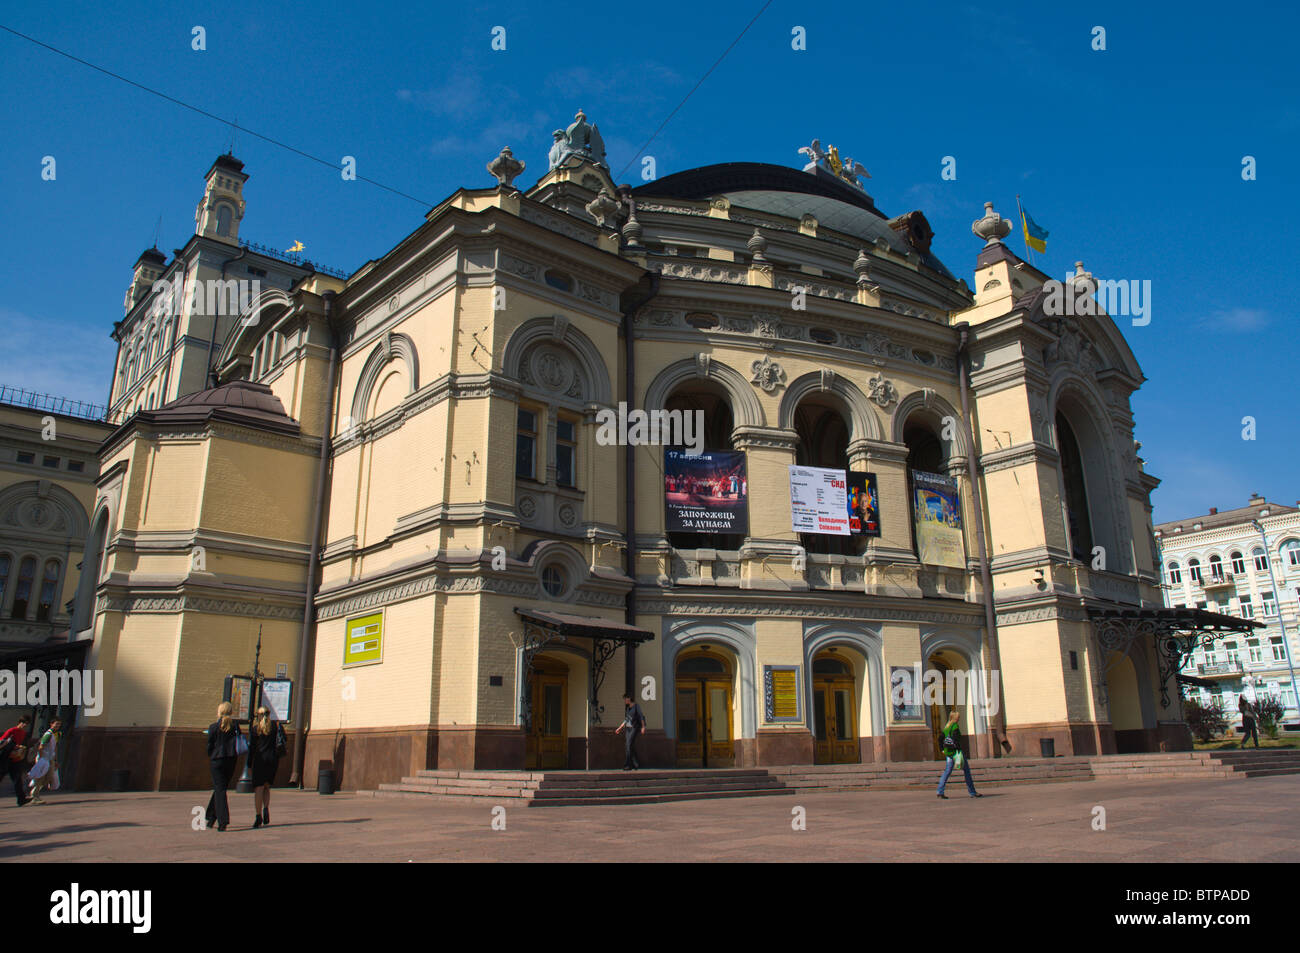 Ukrainian National Opera and Ballet house central Kiev Ukraine Europe Stock Photo